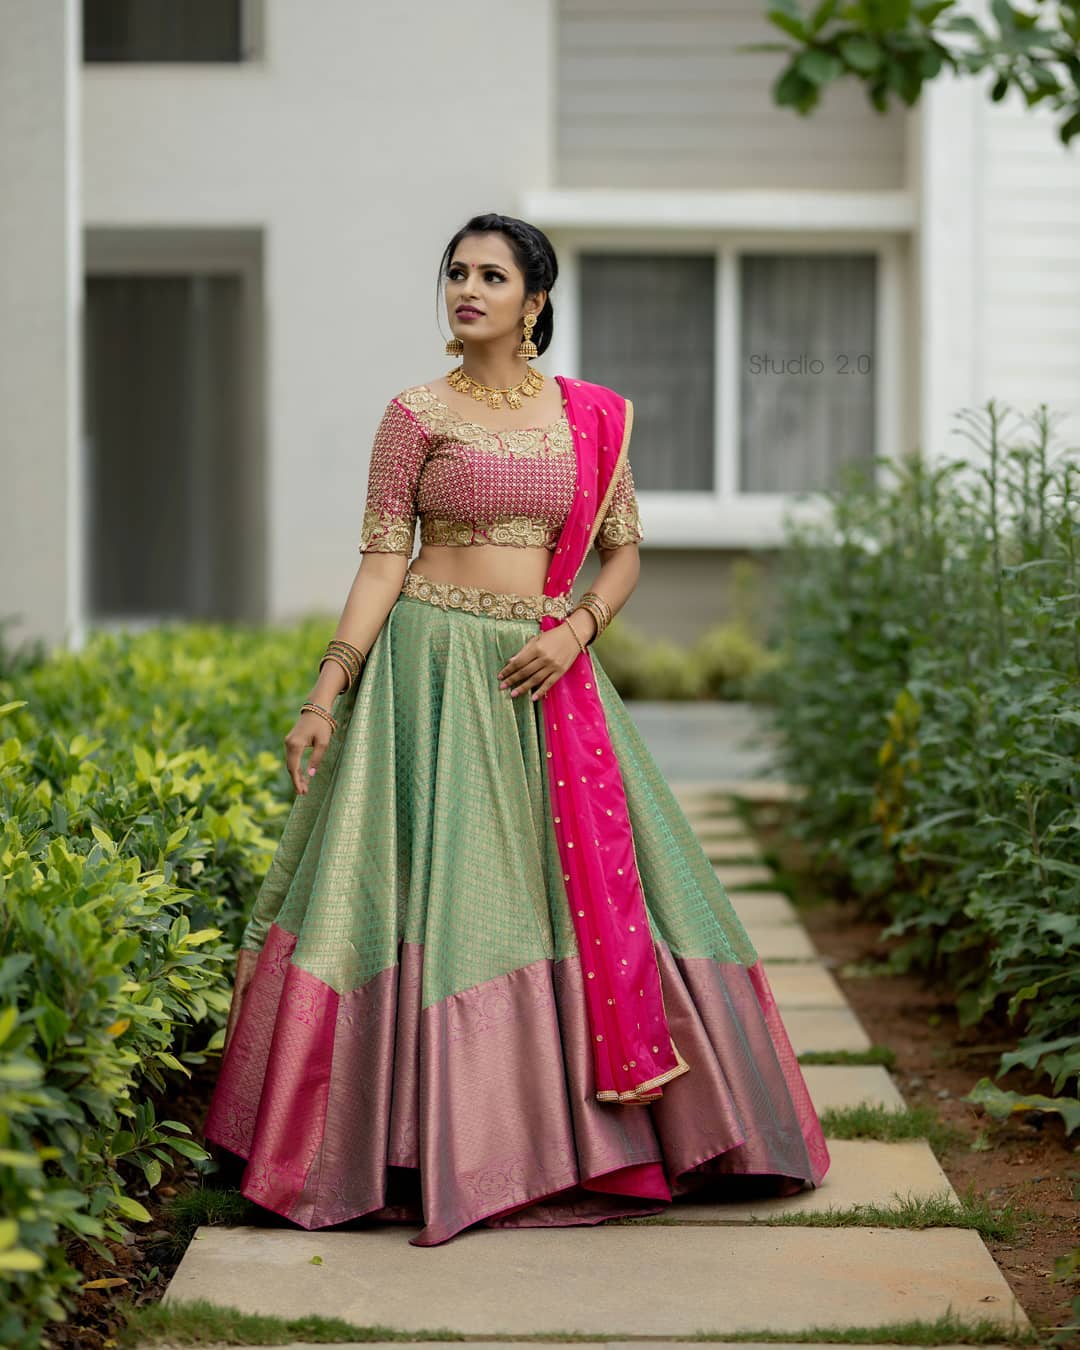 Where is an original silk saree available in Tamilnadu? - Quora